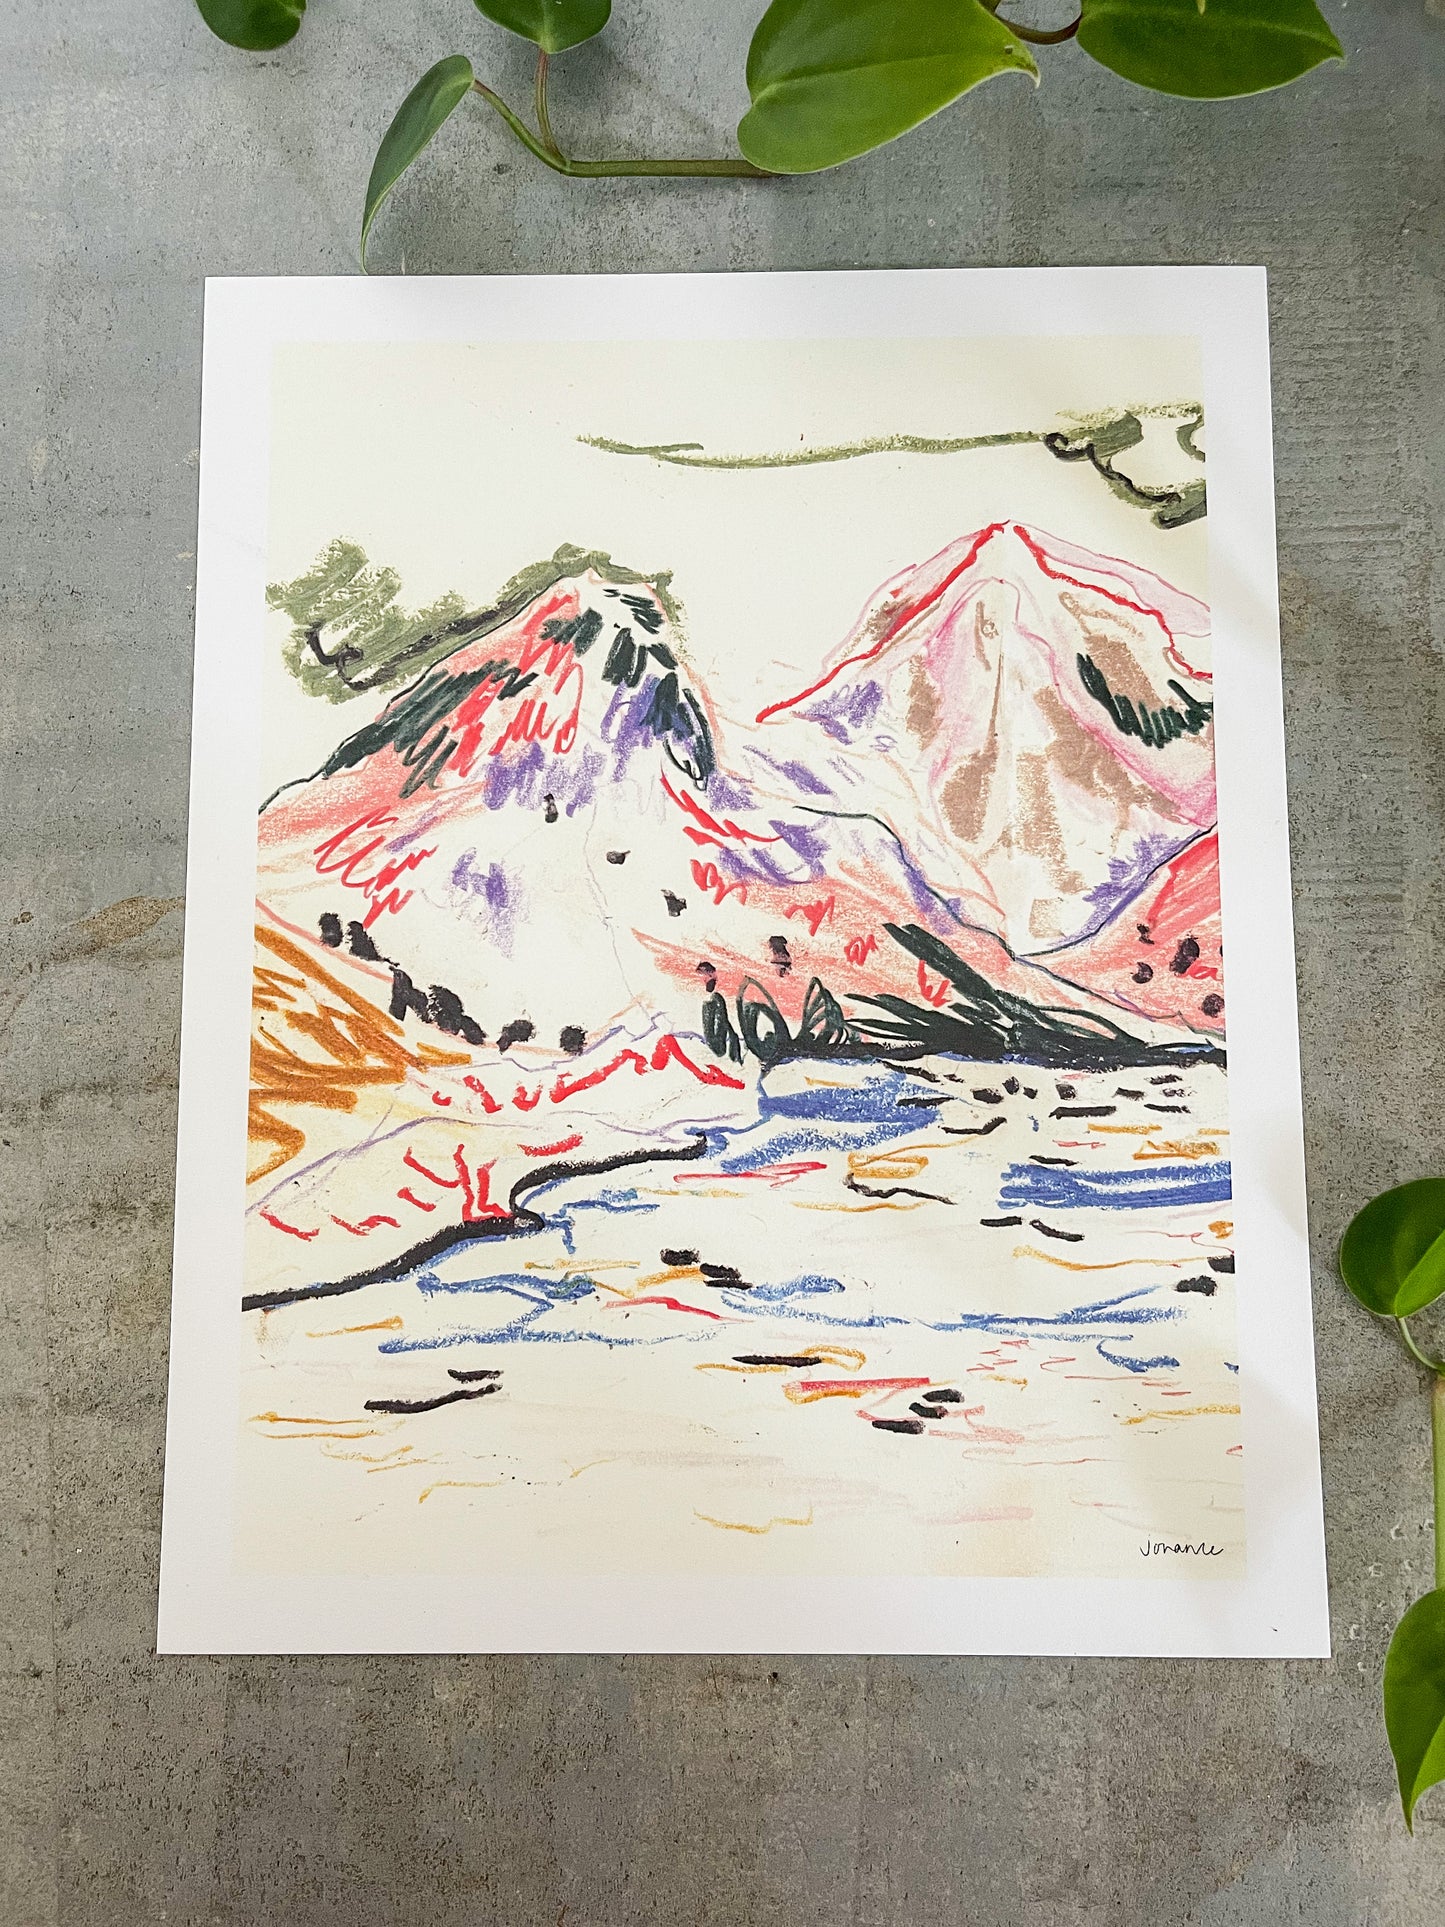 Climb Every Mountain Print